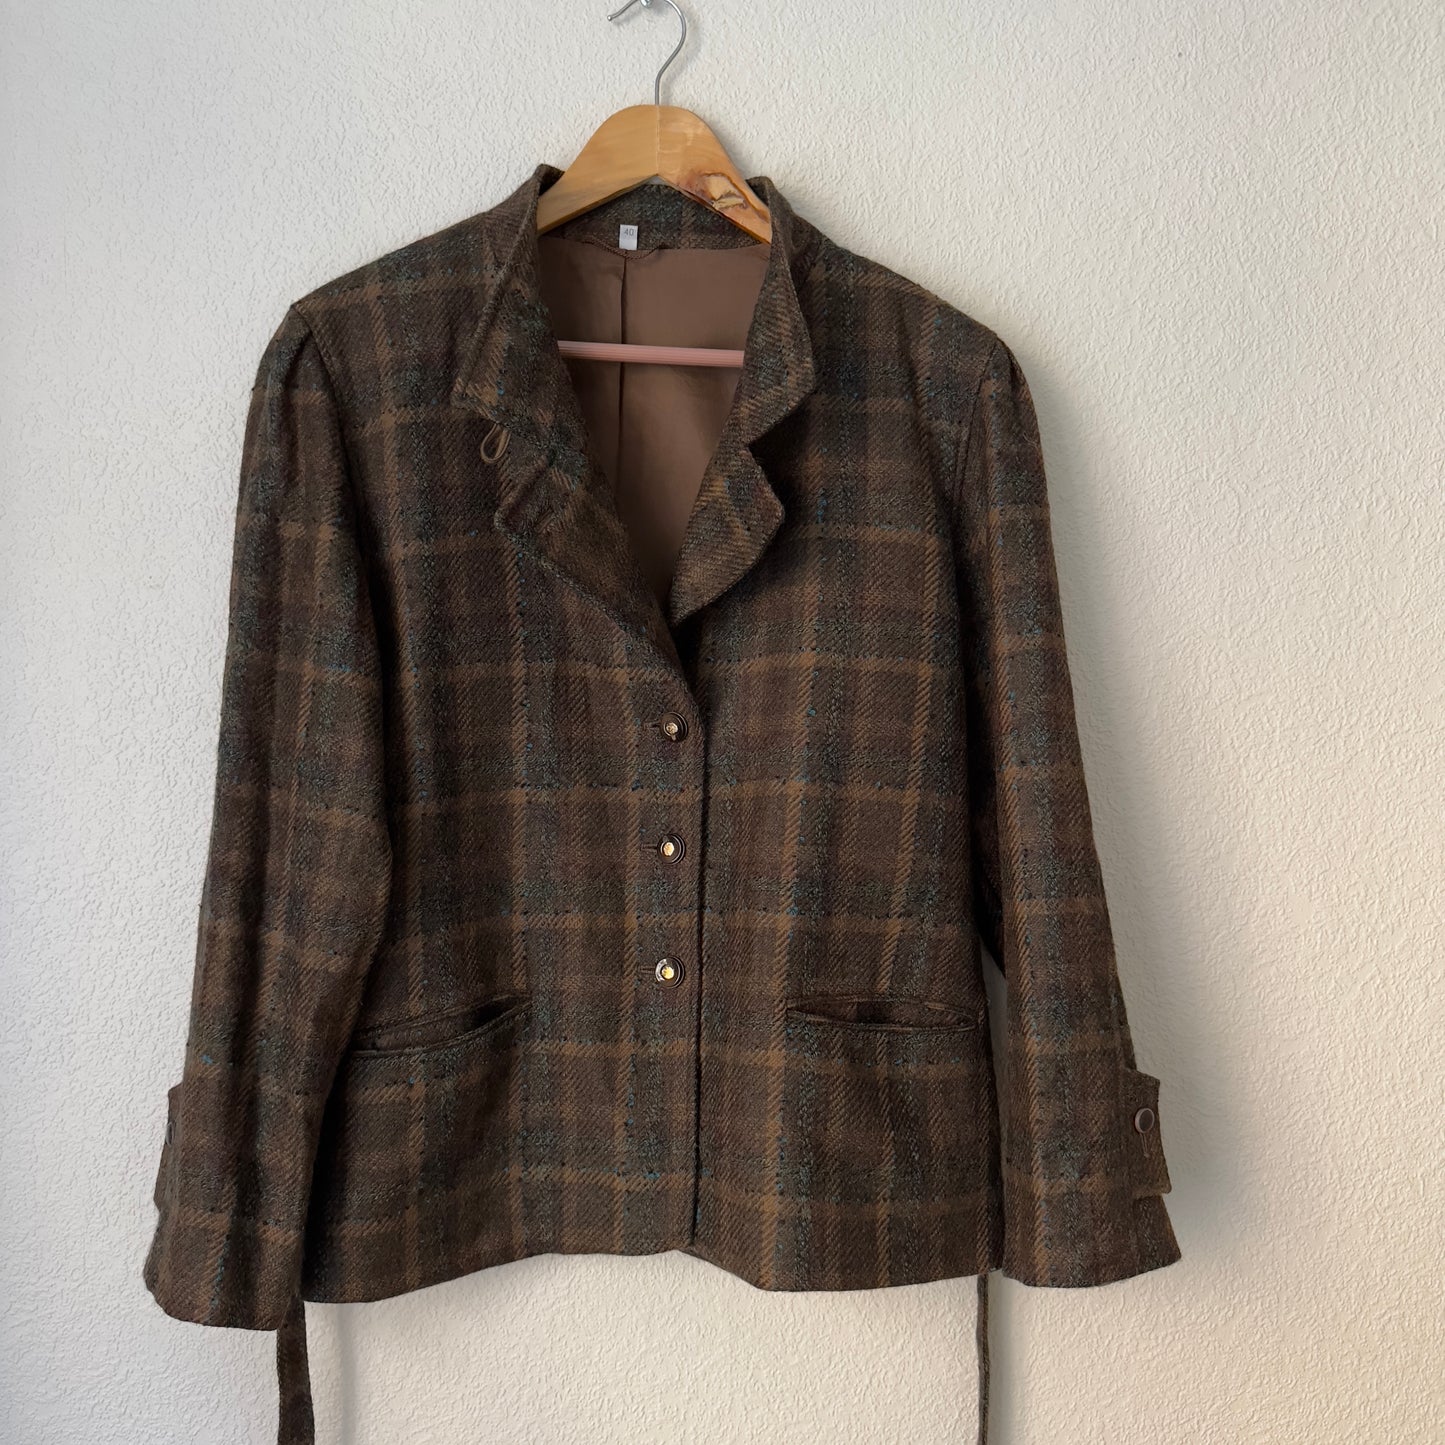 Vintage Brown Wool Blazer with Belt and Scarf